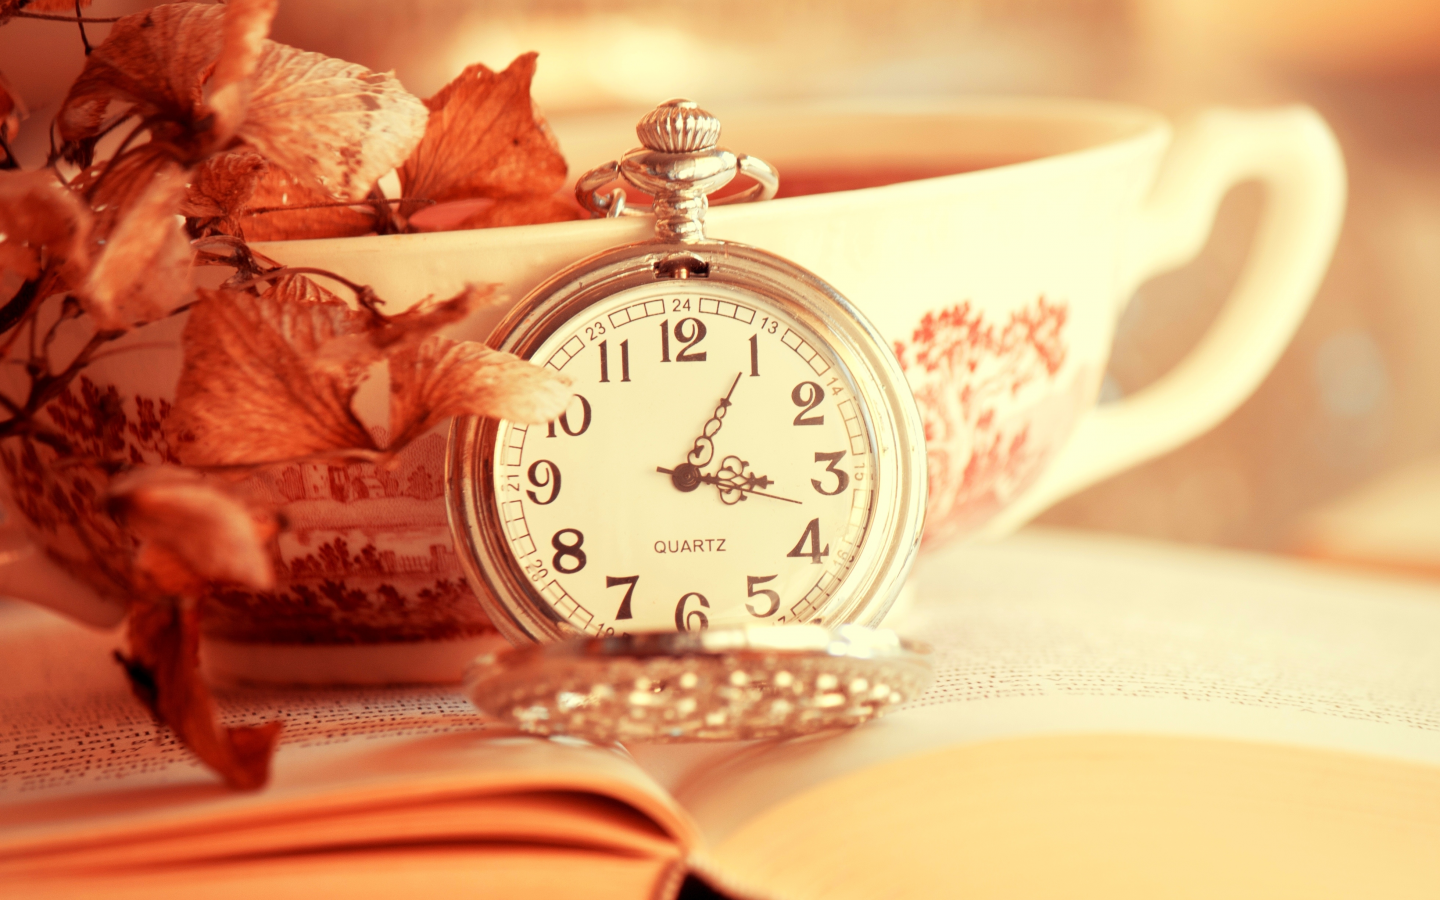 book, time, cup, время, часы, leaves, dial, циферблат, книга, clock